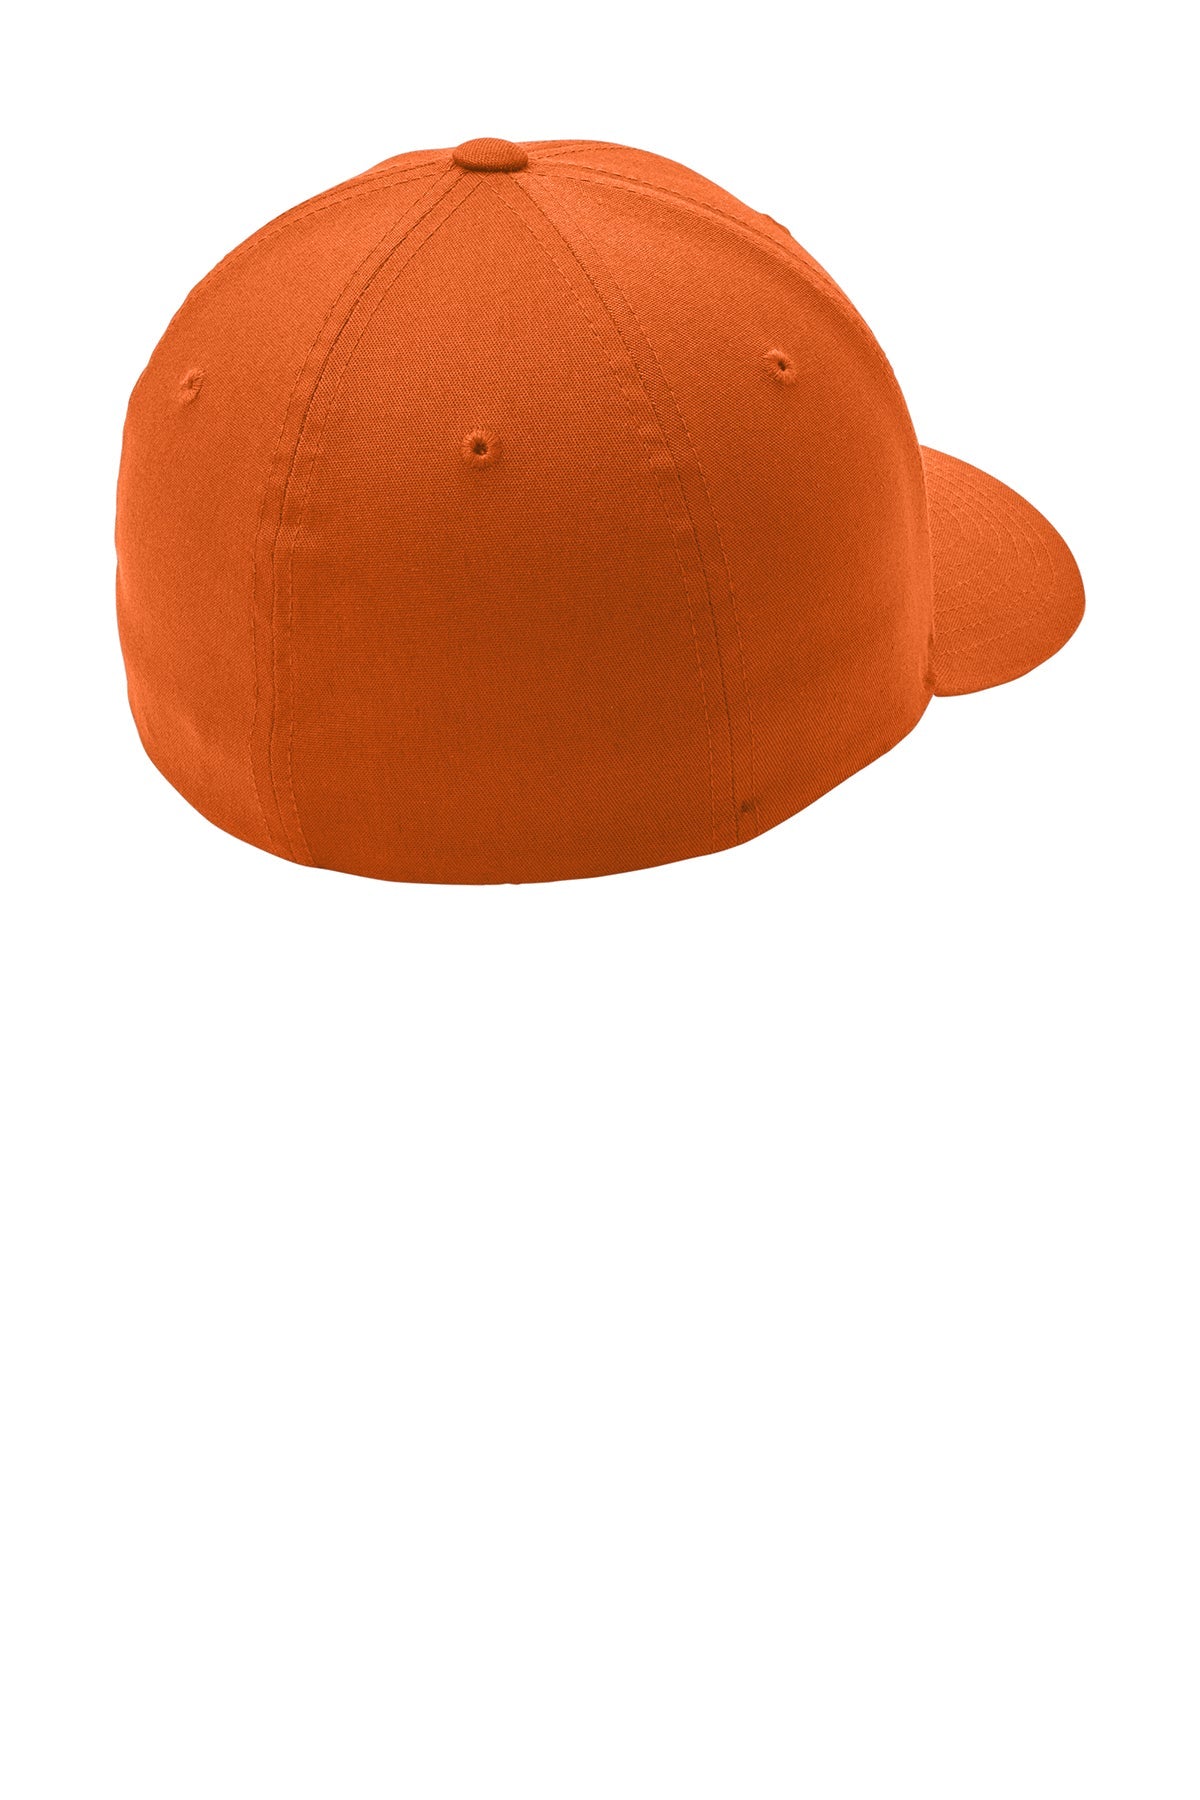 Port Authority Flexfit Cotton Twill Customized Caps, Orange